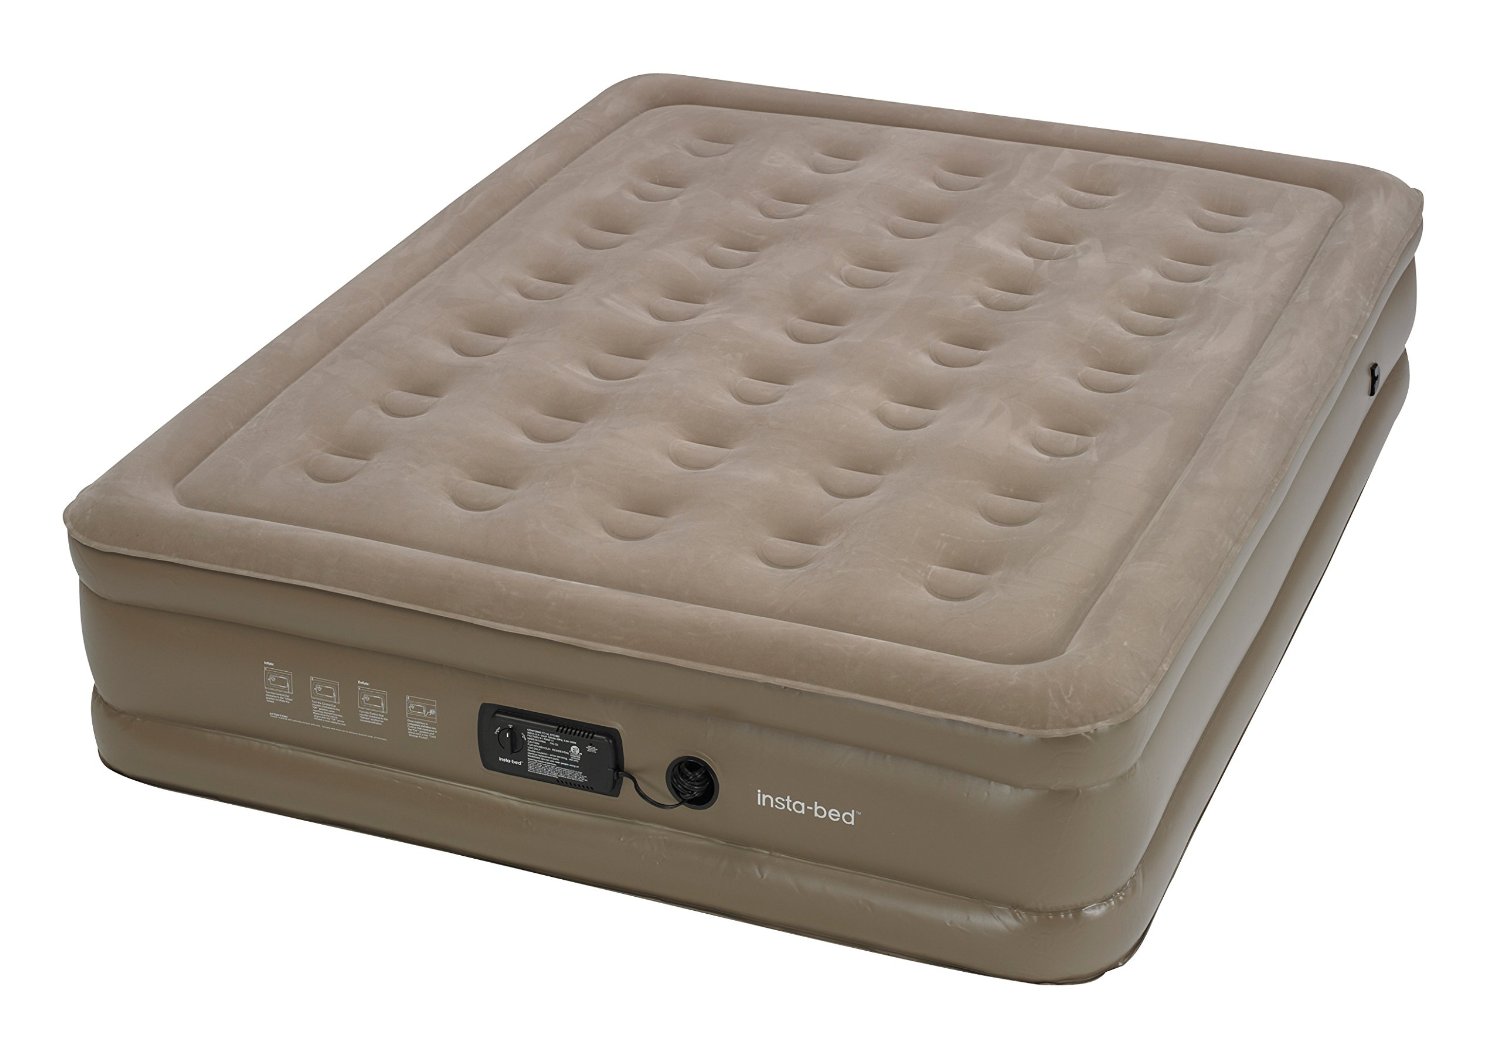 instabed air mattress